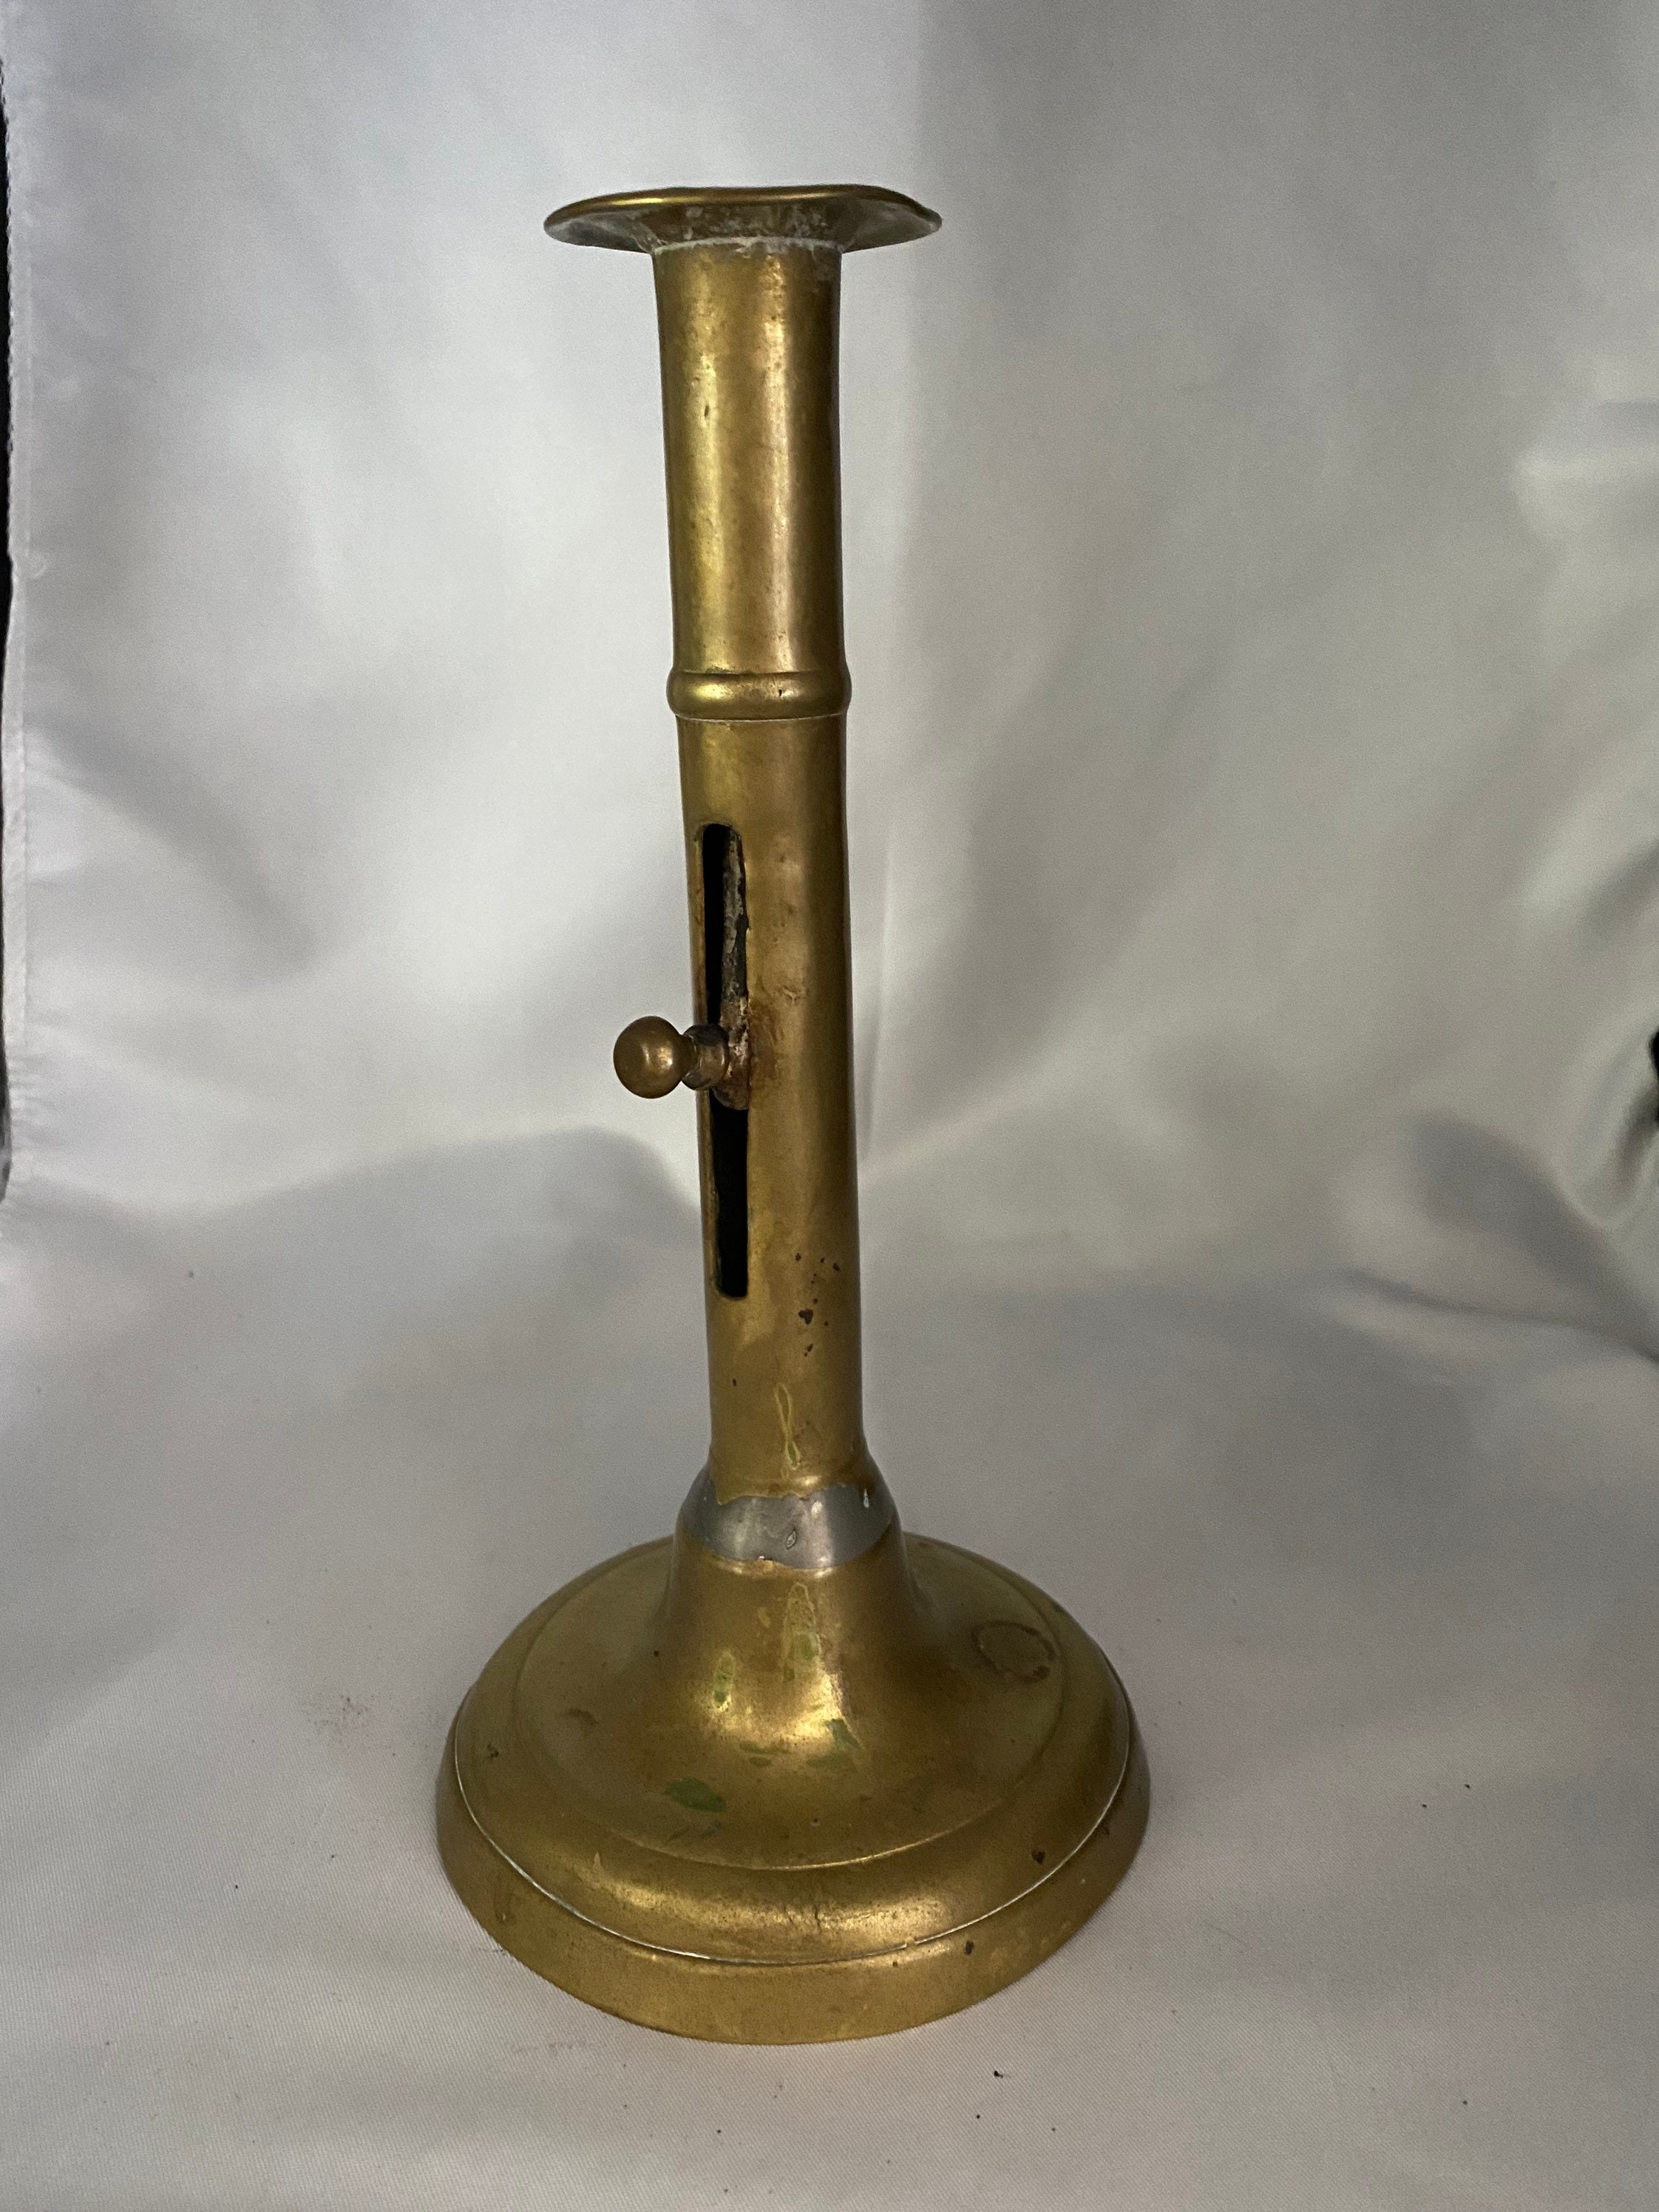 Antique Brass Push-up Candlestick Holder. -  Canada